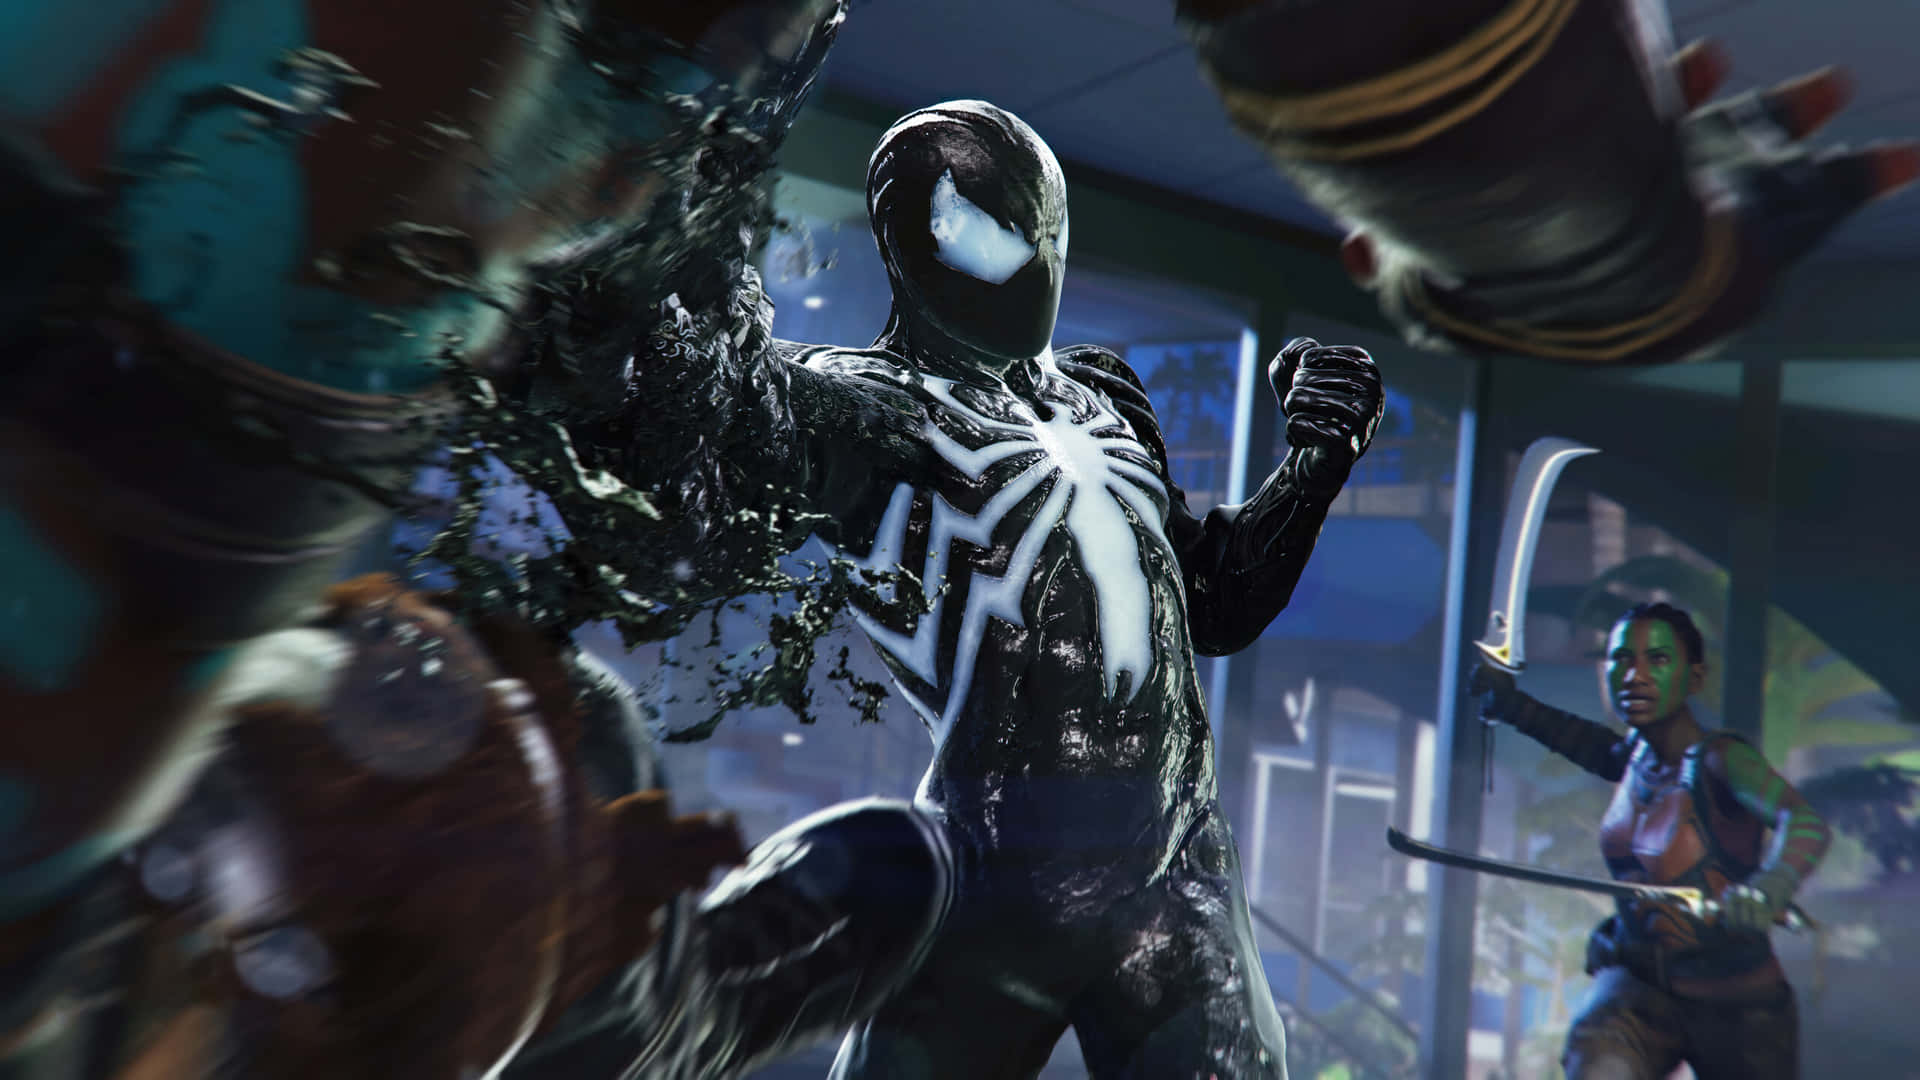 Symbiote Spider Man Action Pose Wallpaper